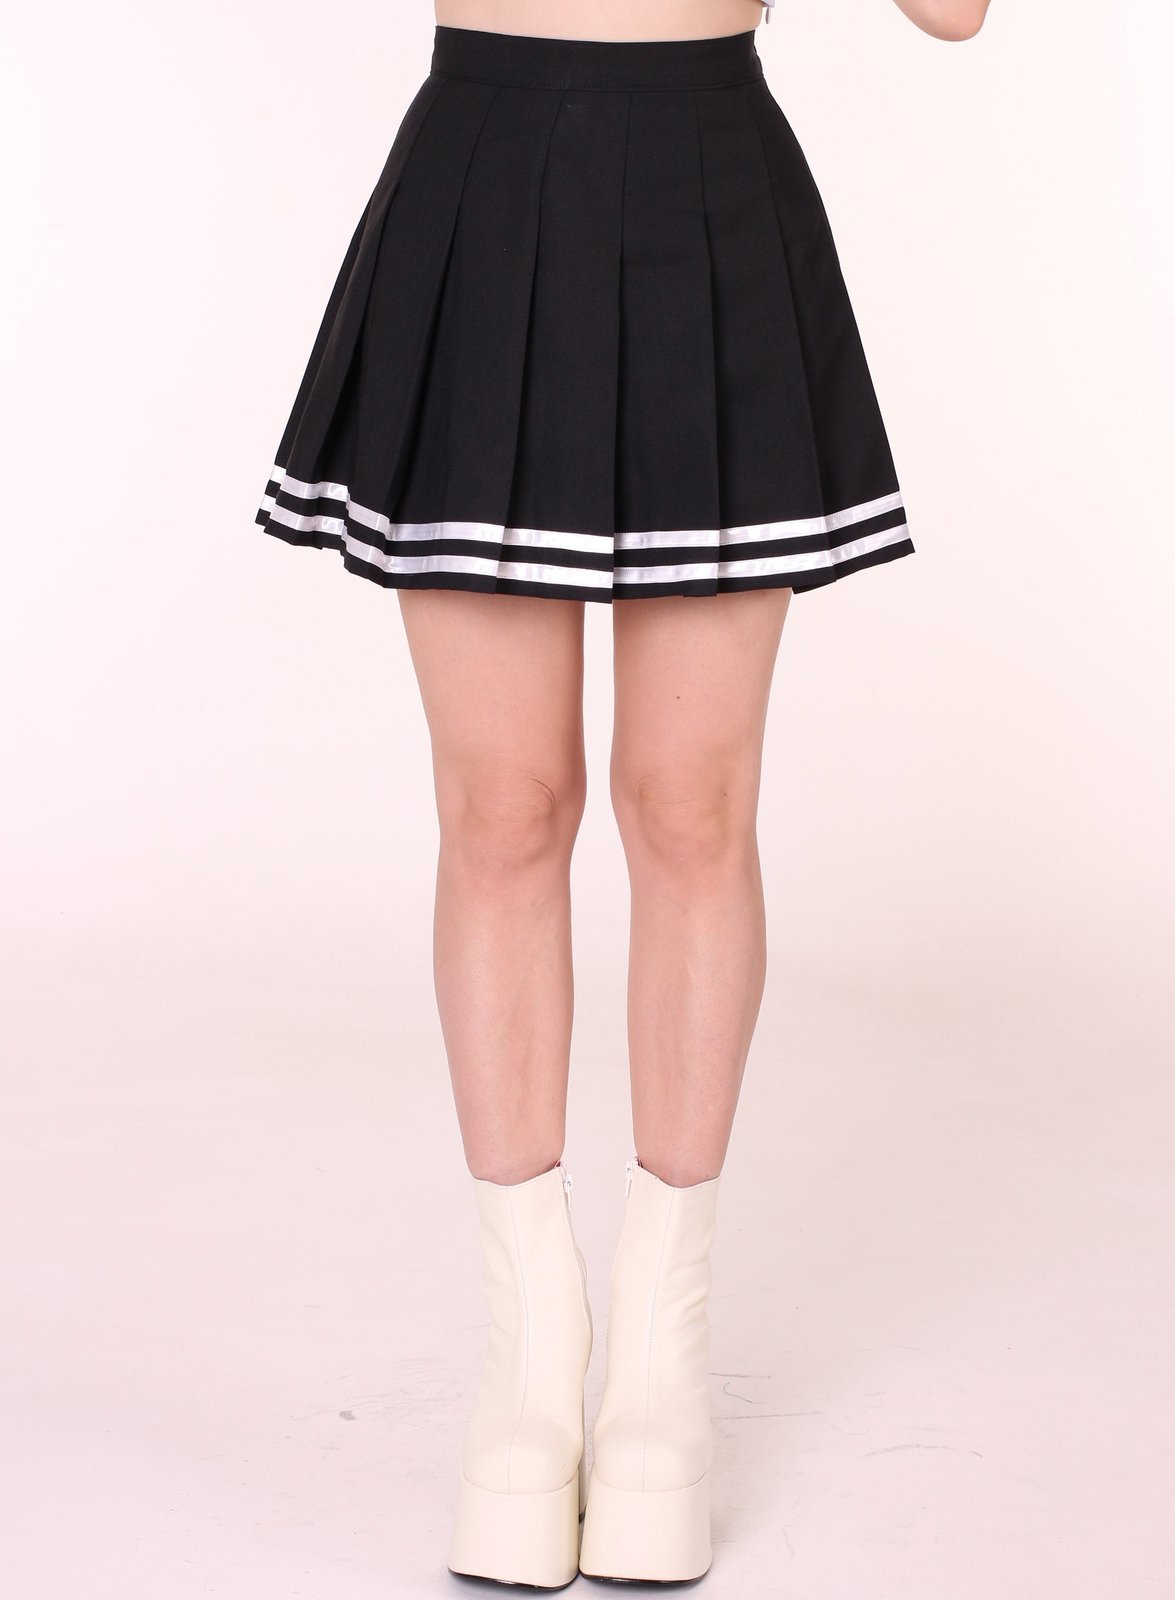 Black cheerleading skirt